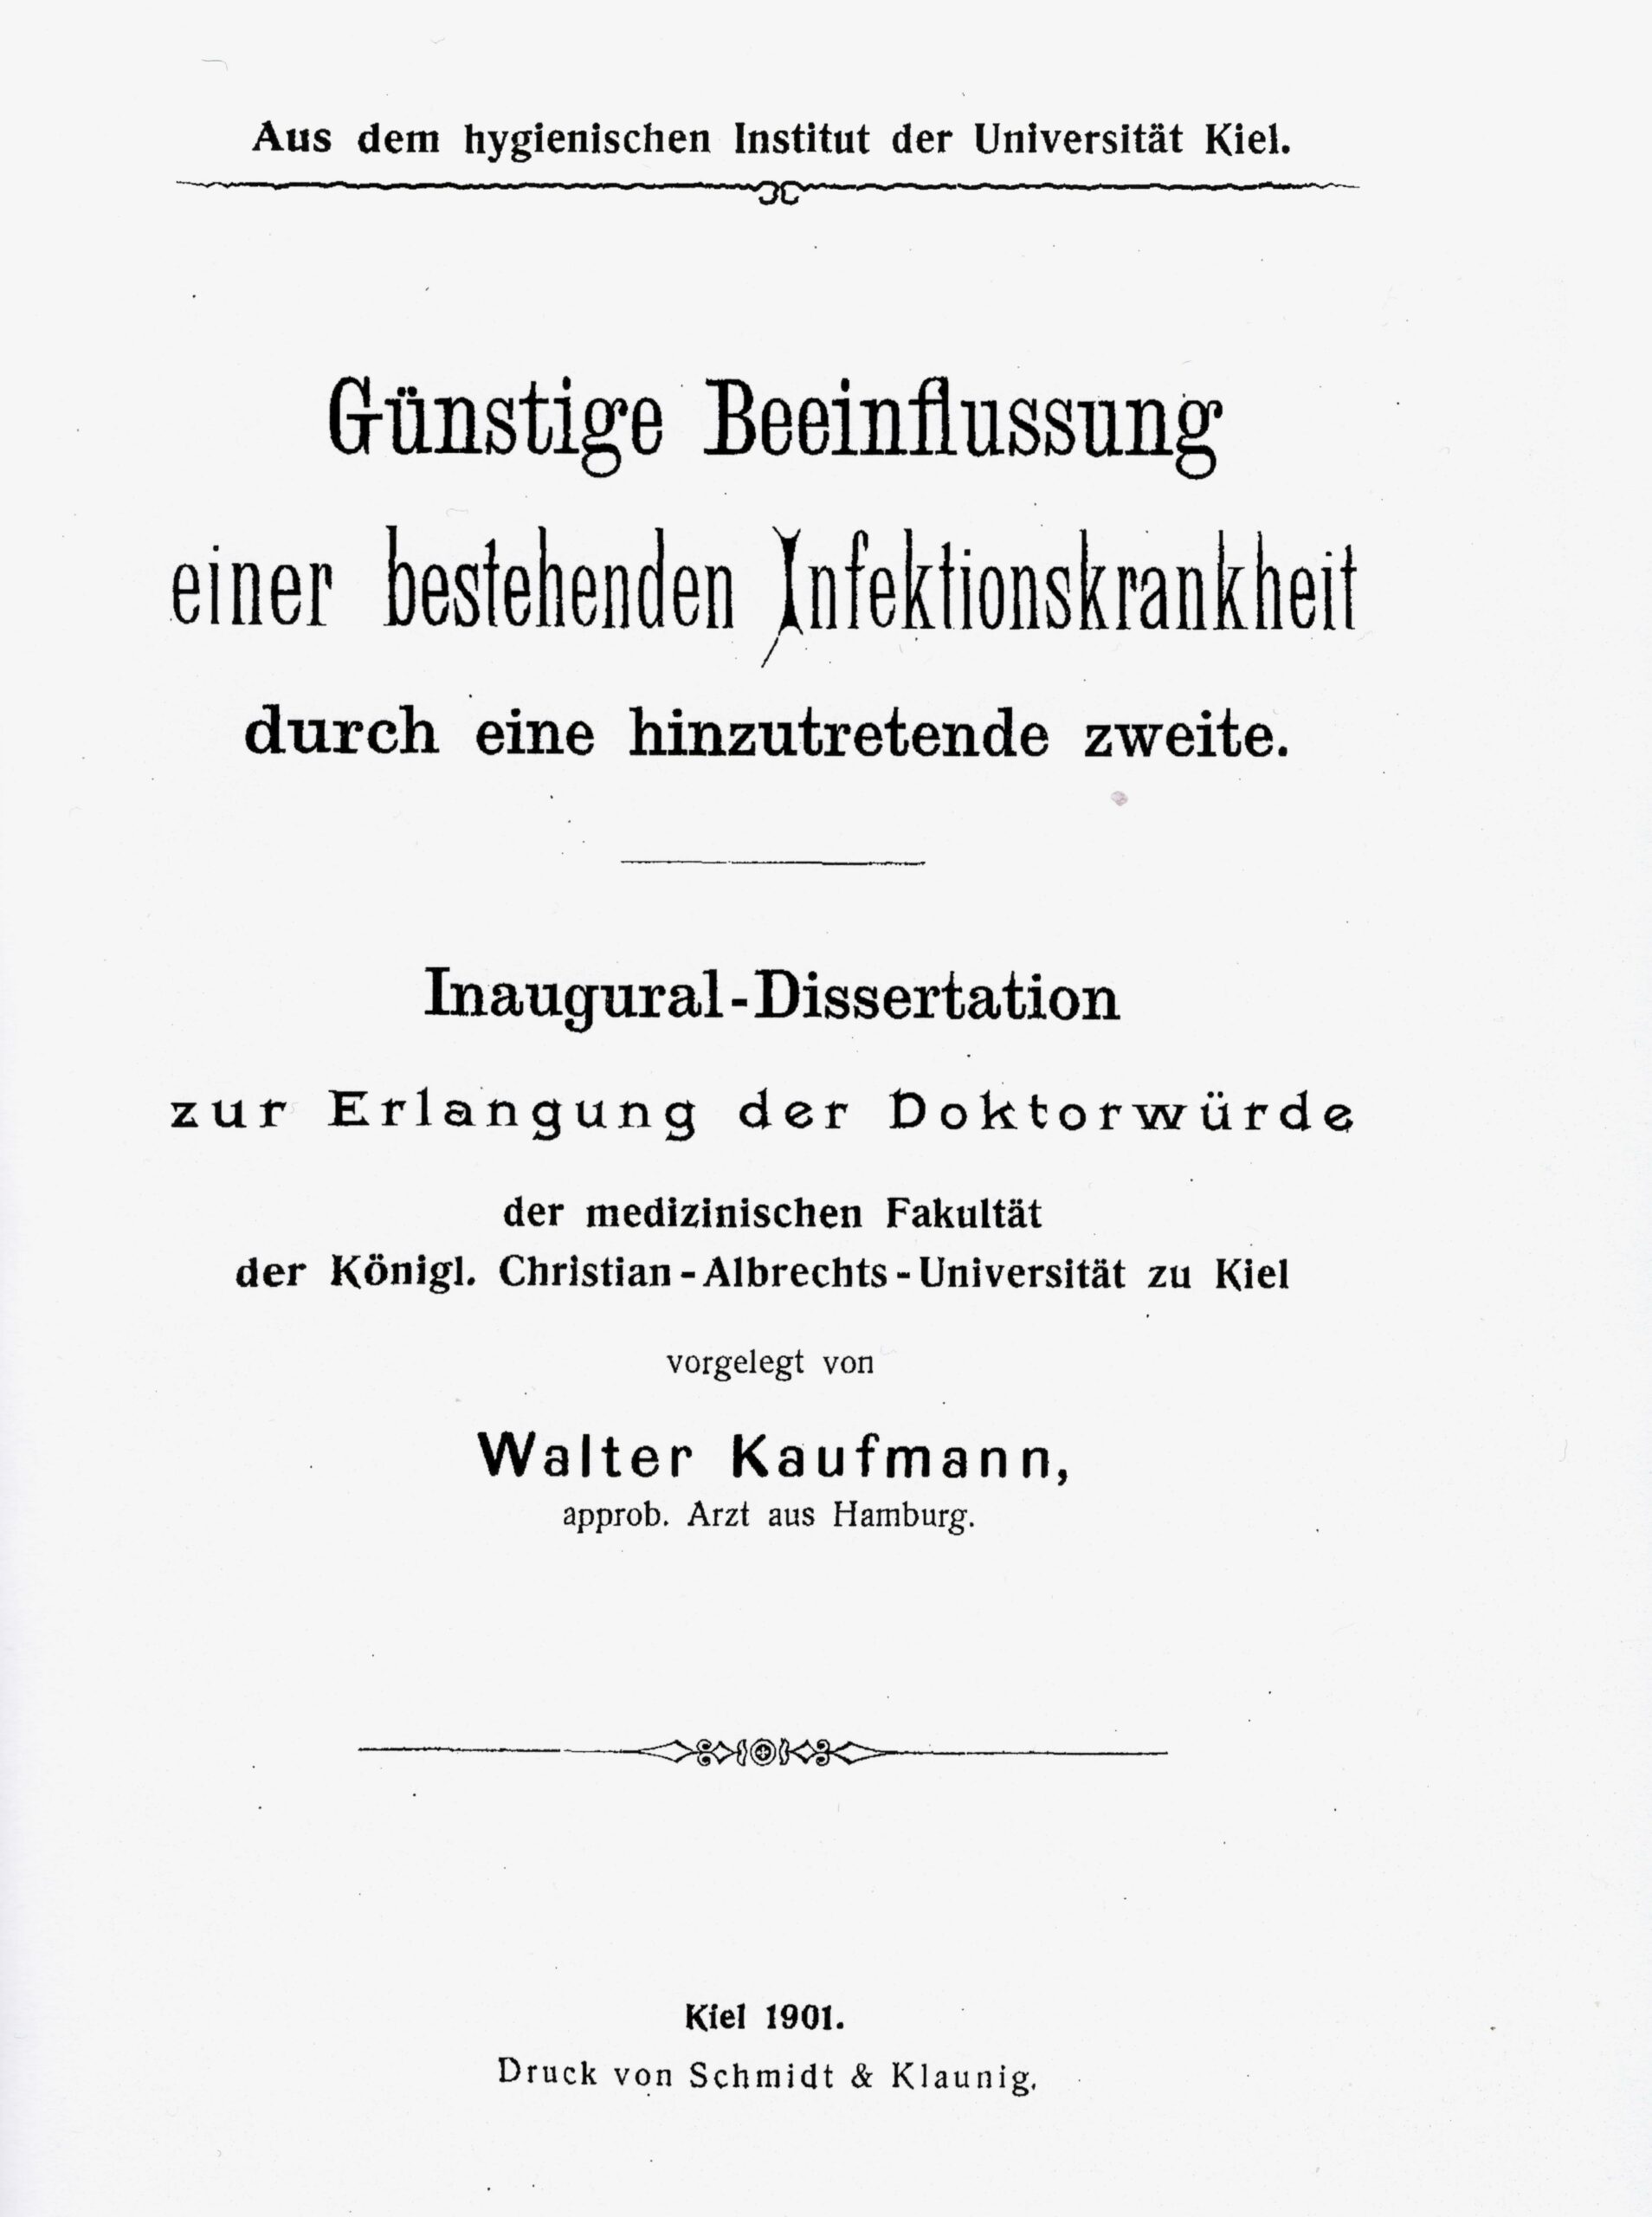 Dissertation, Kiel 1901